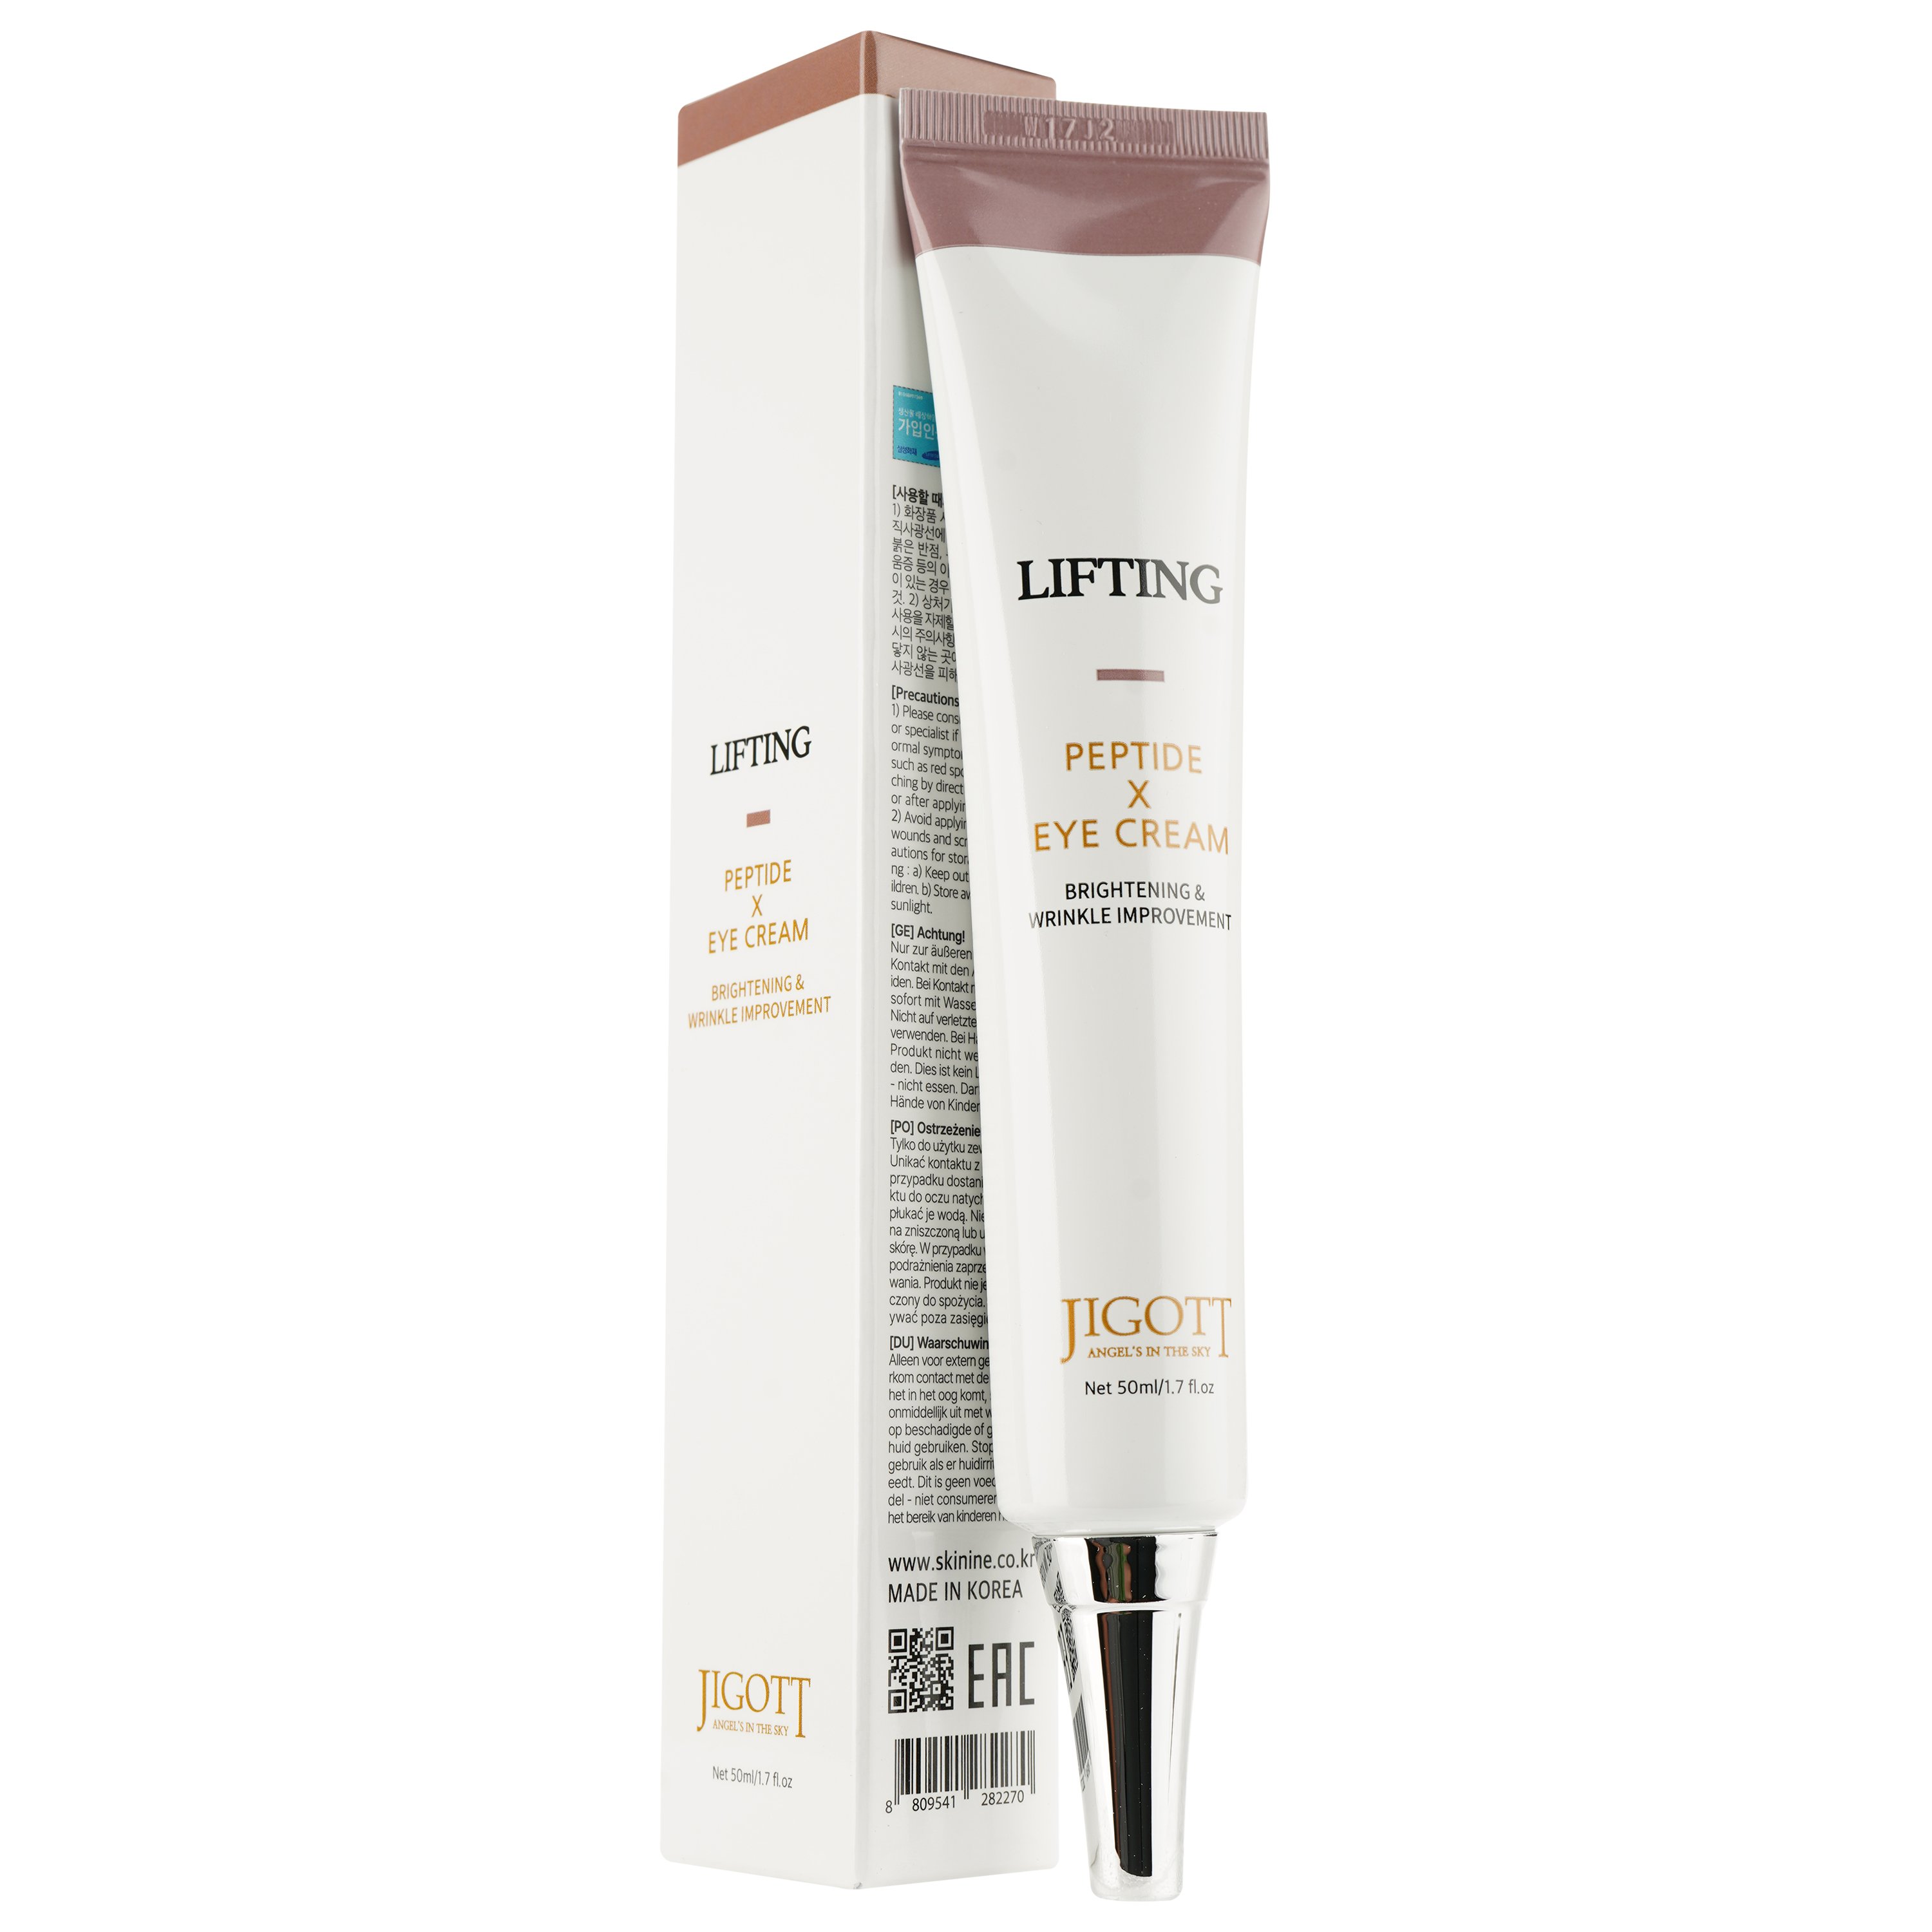 Кpем для век Jigott Lifting Peptide Eye Cream, 50 мл - фото 1